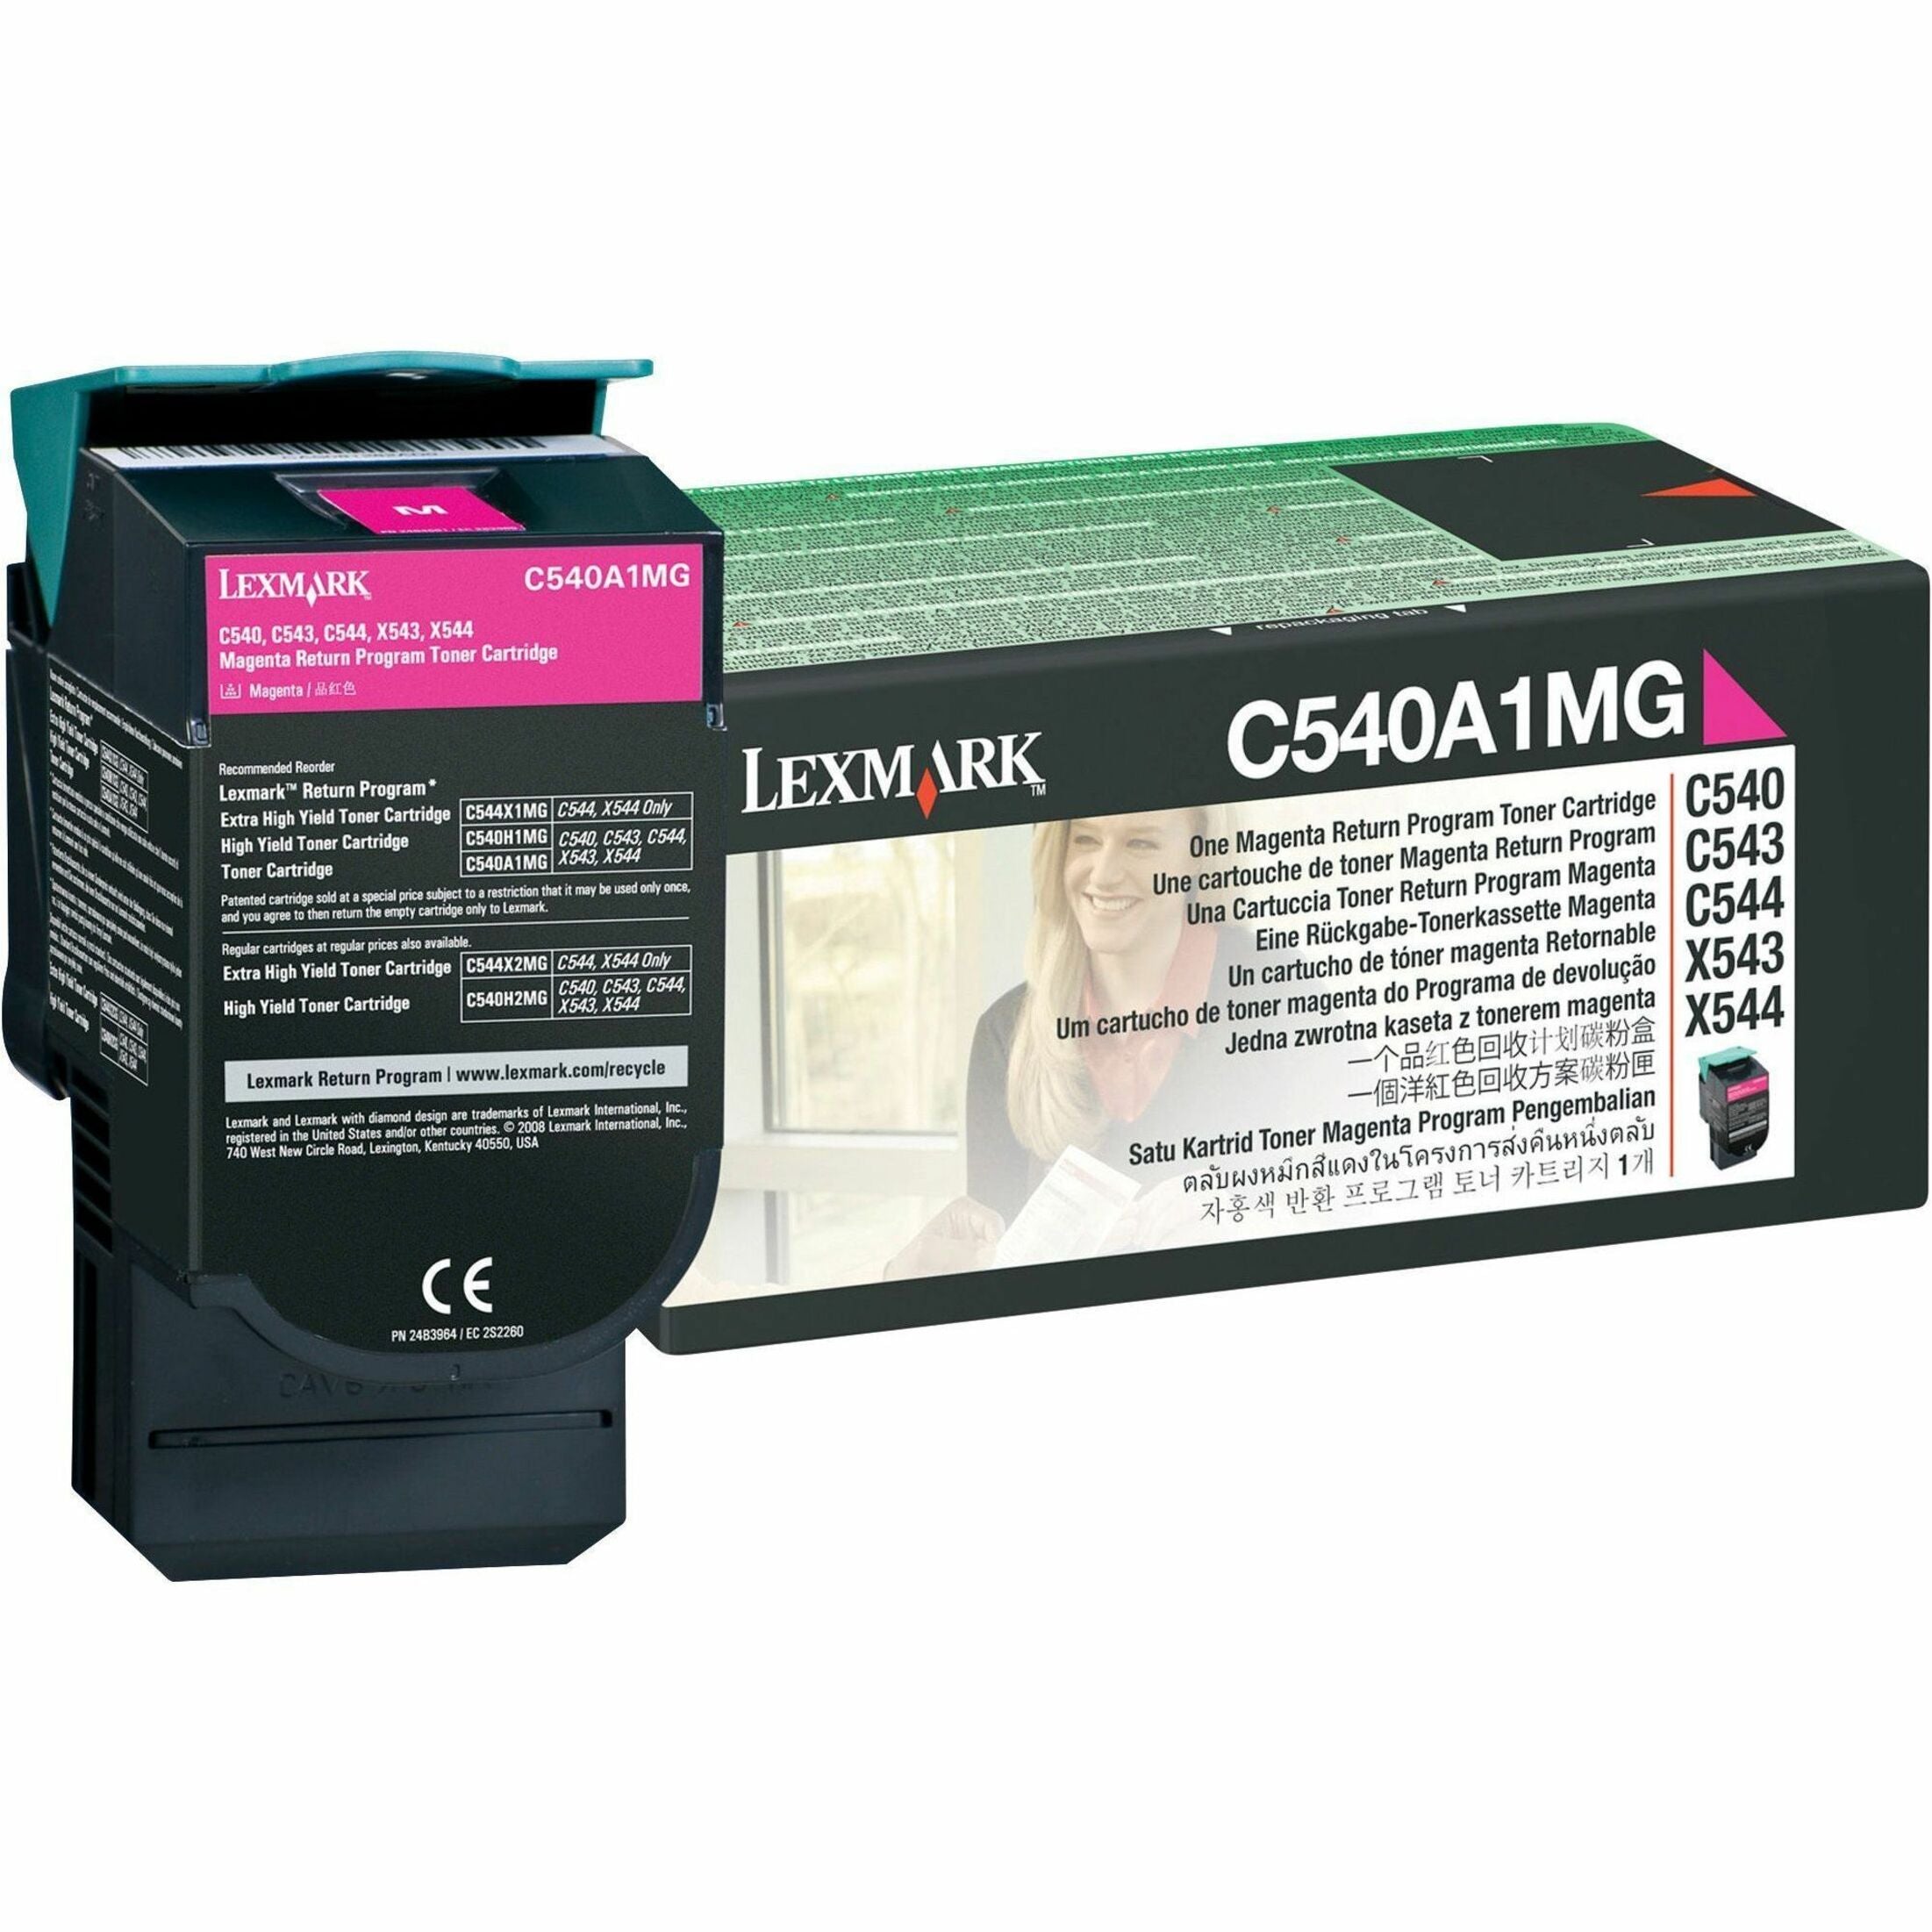 Lexmark C540A1MG C540A1 Series Toner Cartridge, Magenta, 1000 Page Yield